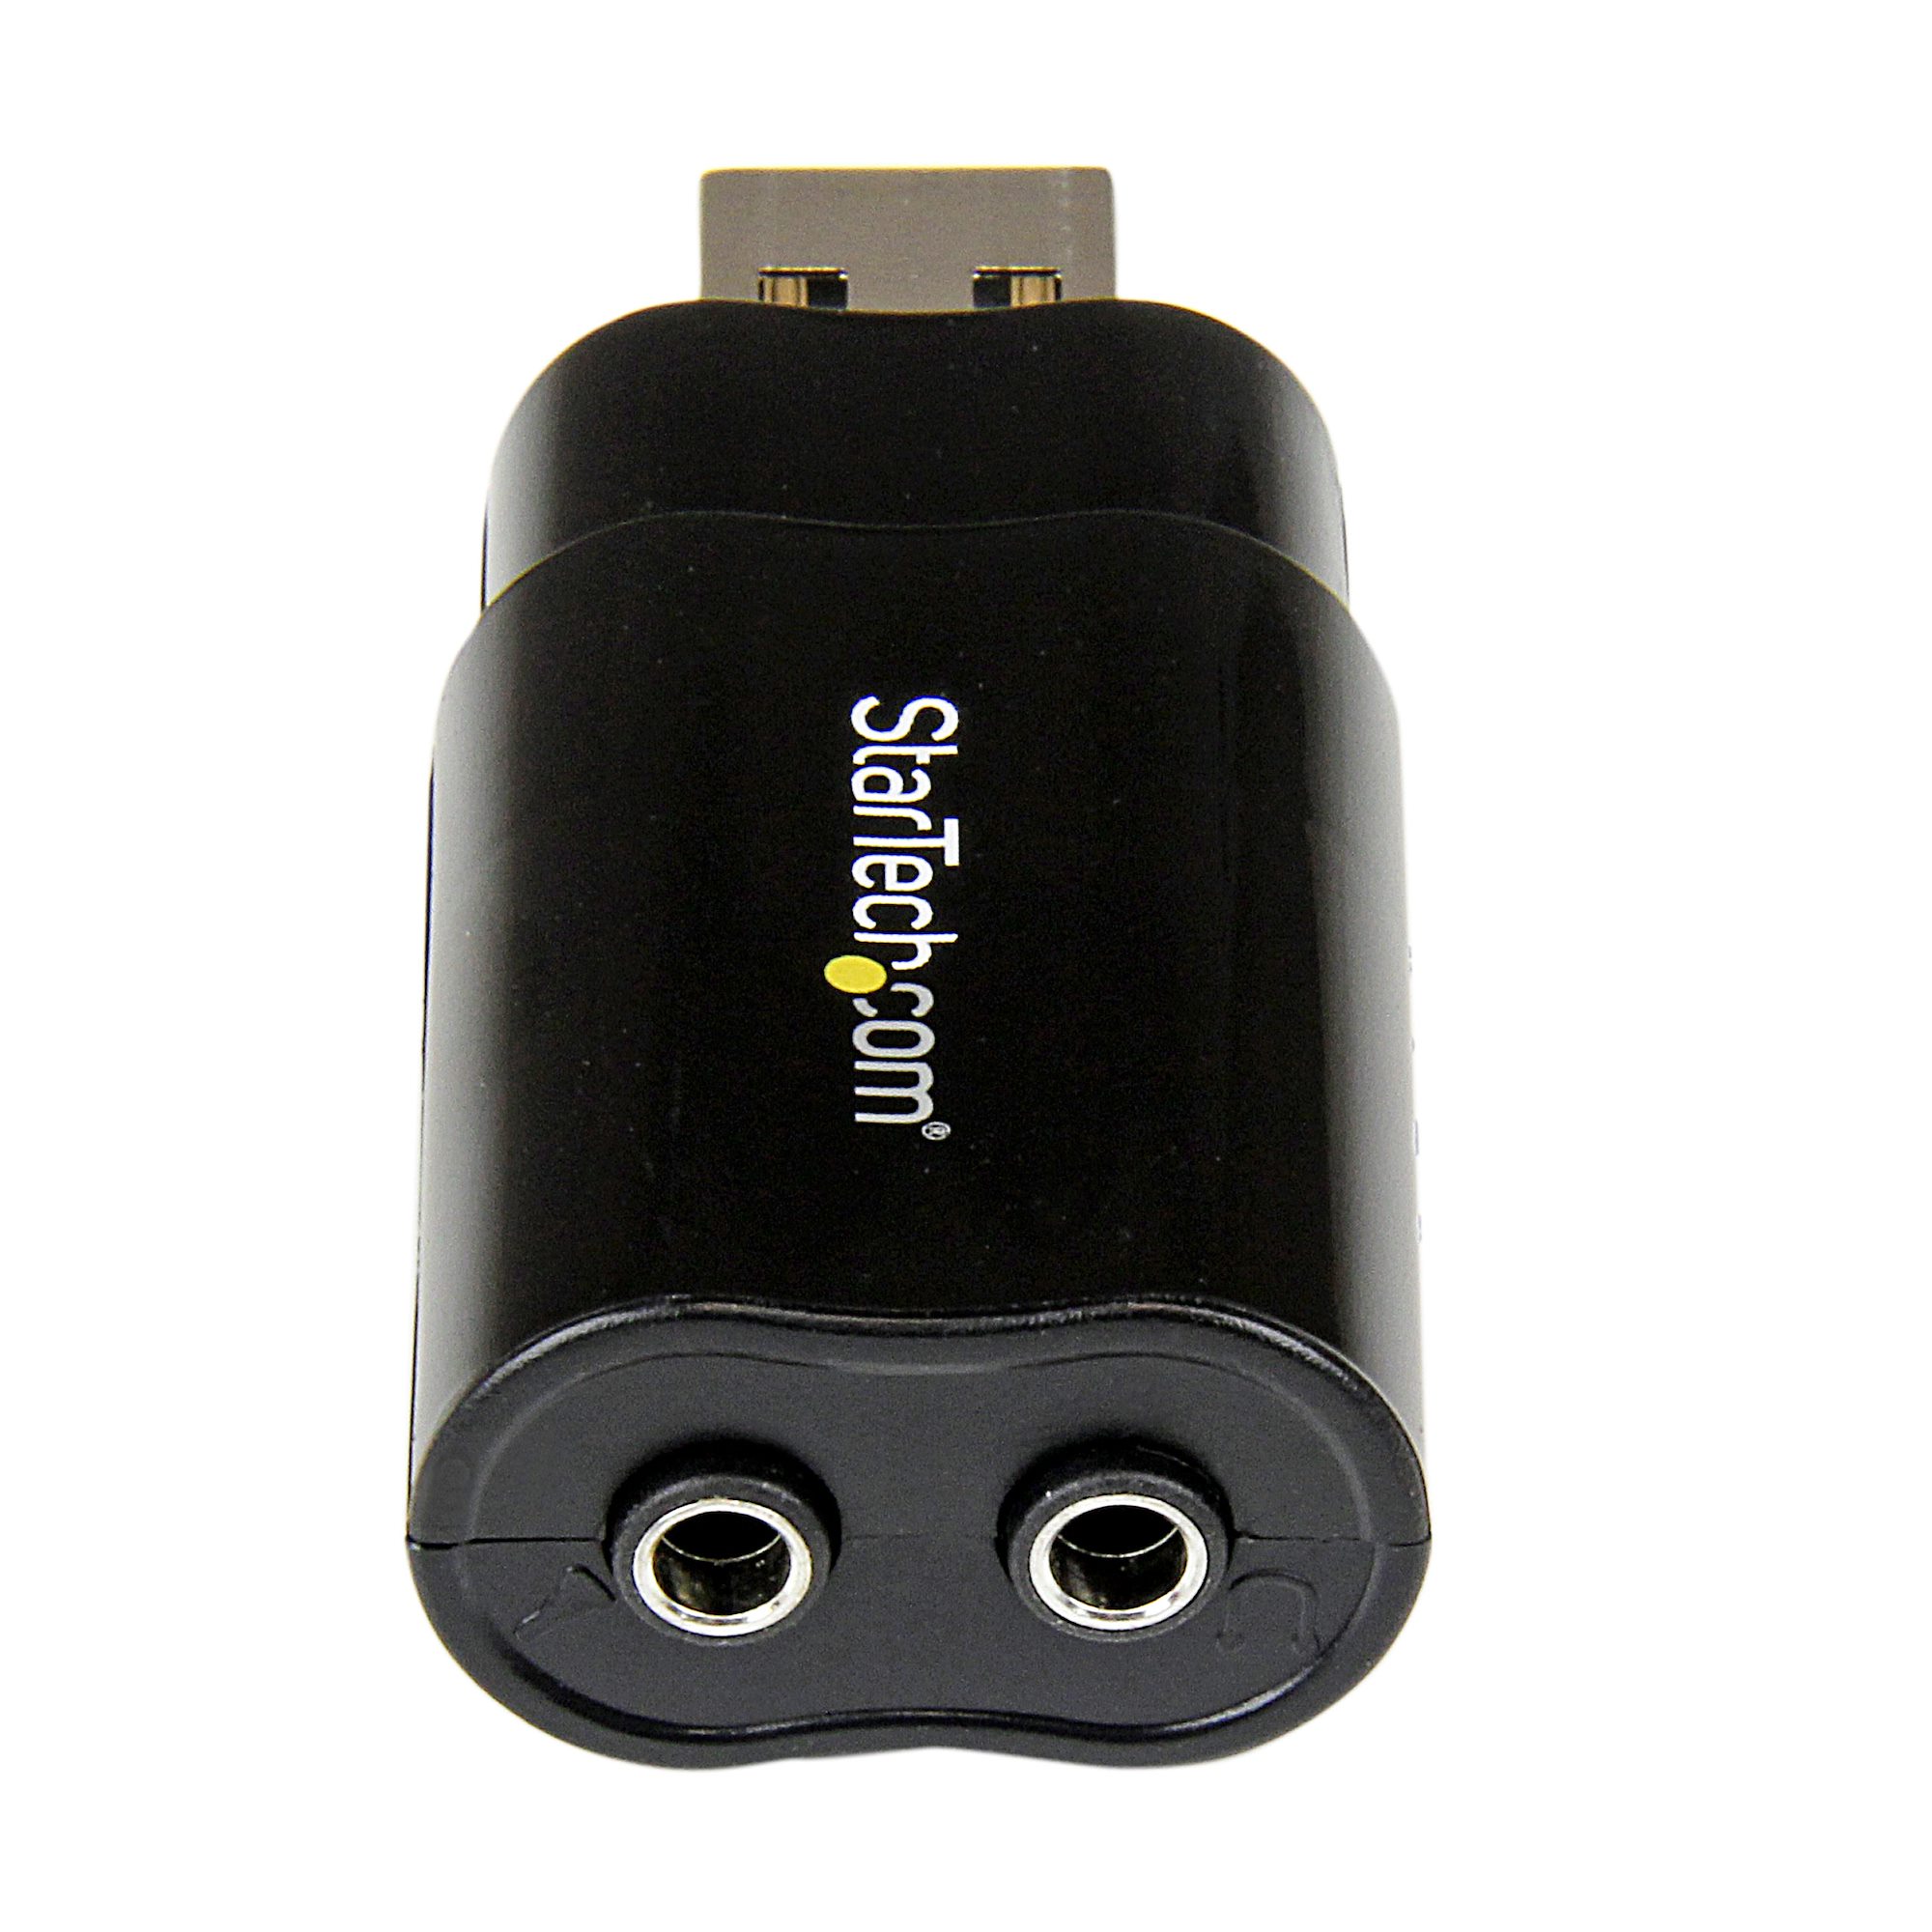 Tag et bad National folketælling Perforering USB Audio Adapter External Sound Card - USB Audio Adapters | StarTech.com